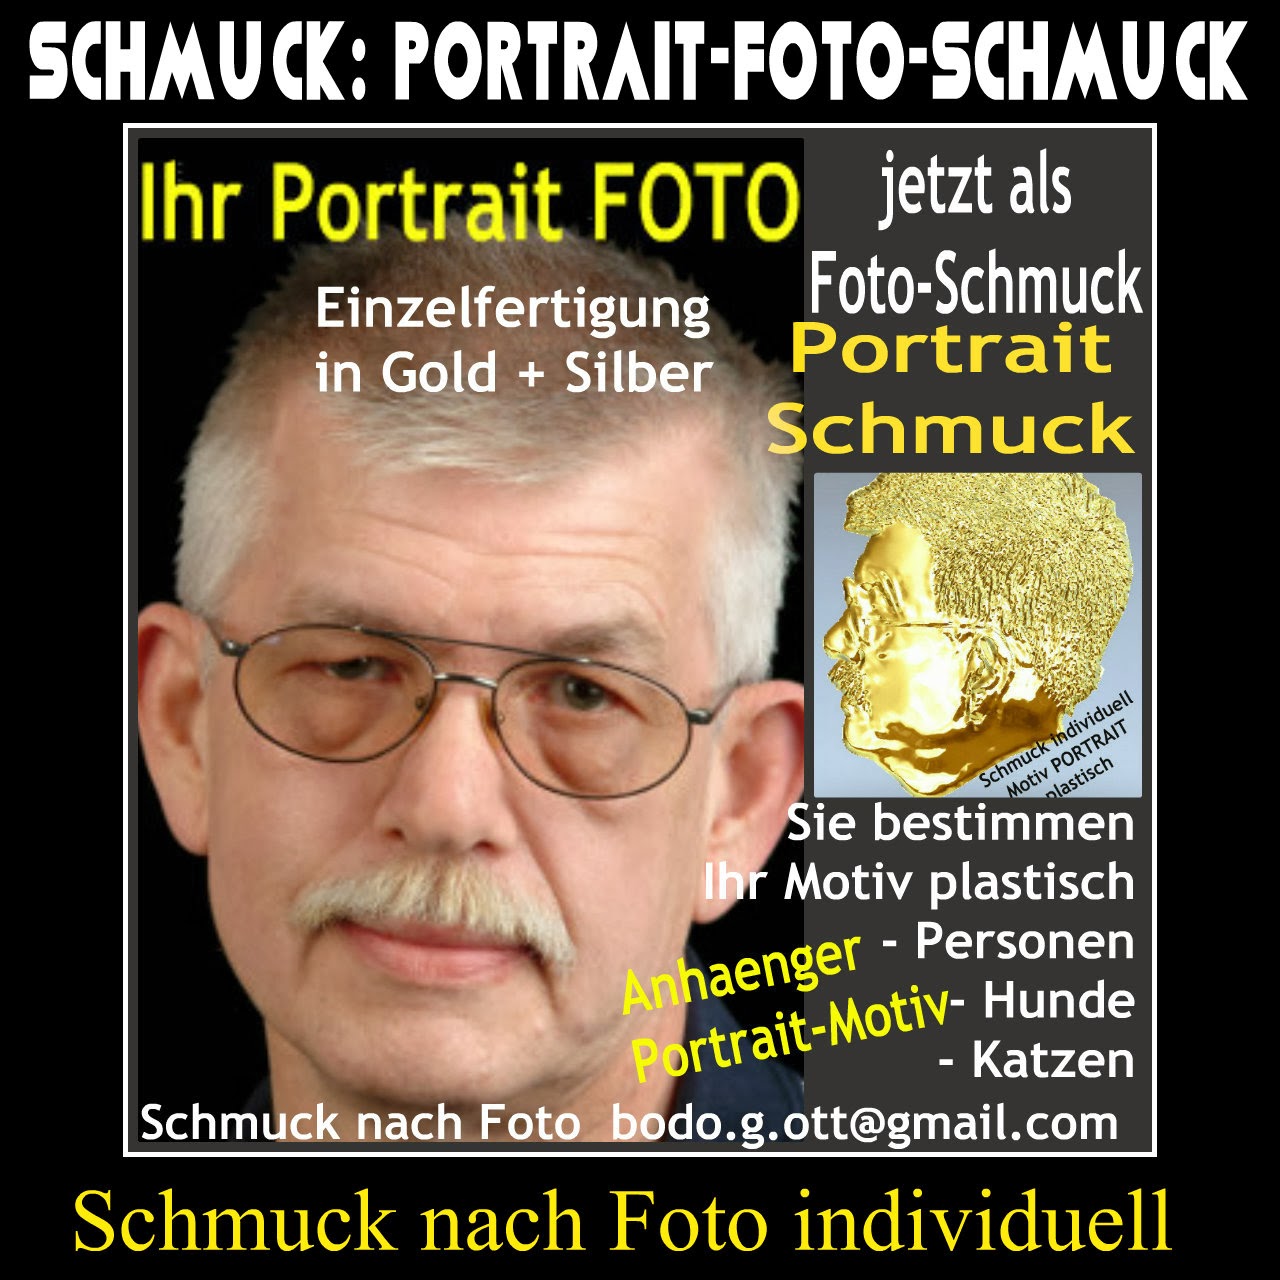 Schmuck,#Fotoschmuck,#Portraitschmuck